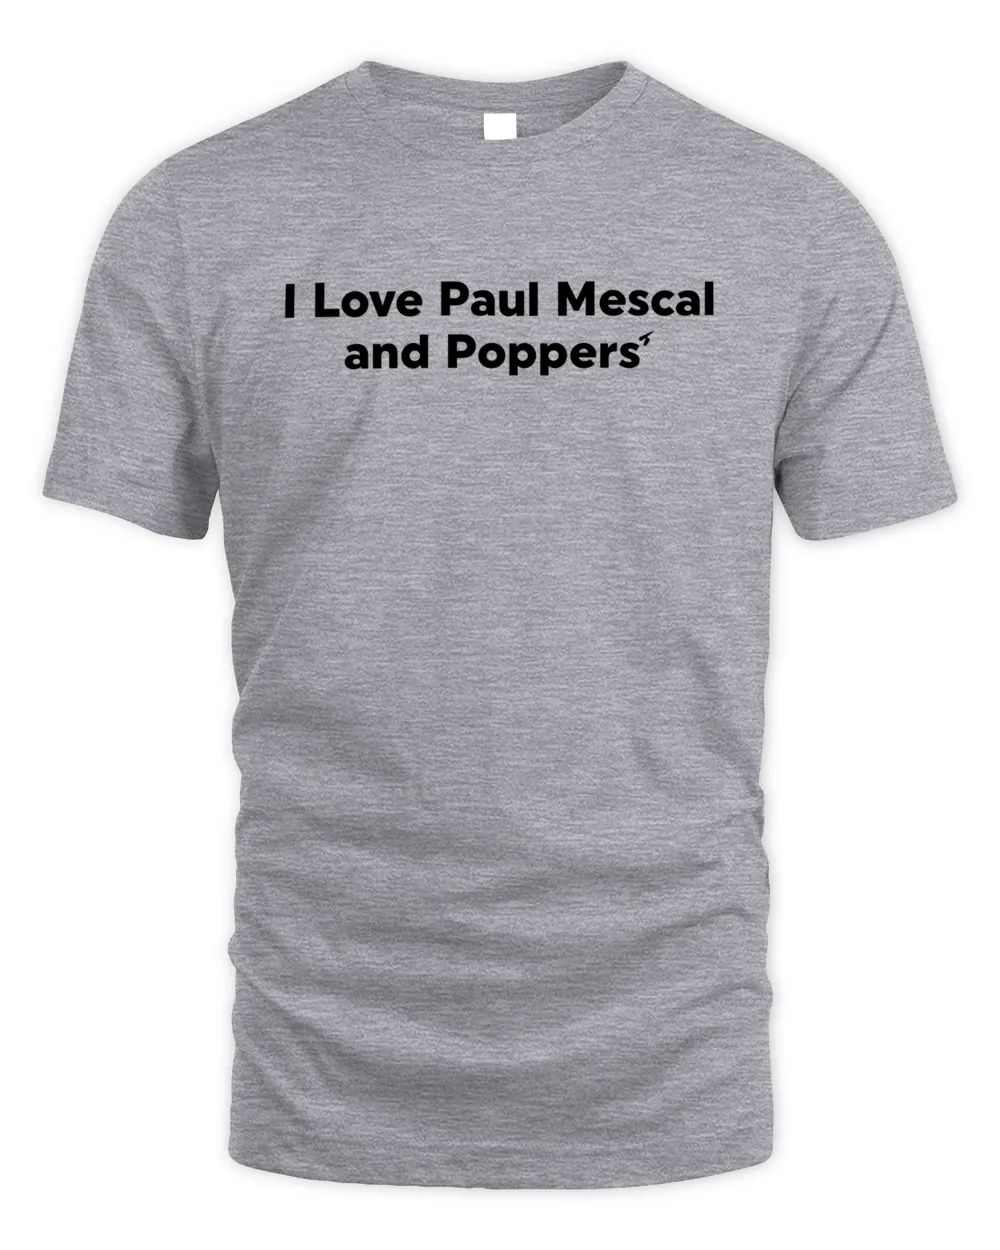 I Love Paul Mescal And Poppers' Tee Shirt Unisex Standard T-Shirt sport-grey 